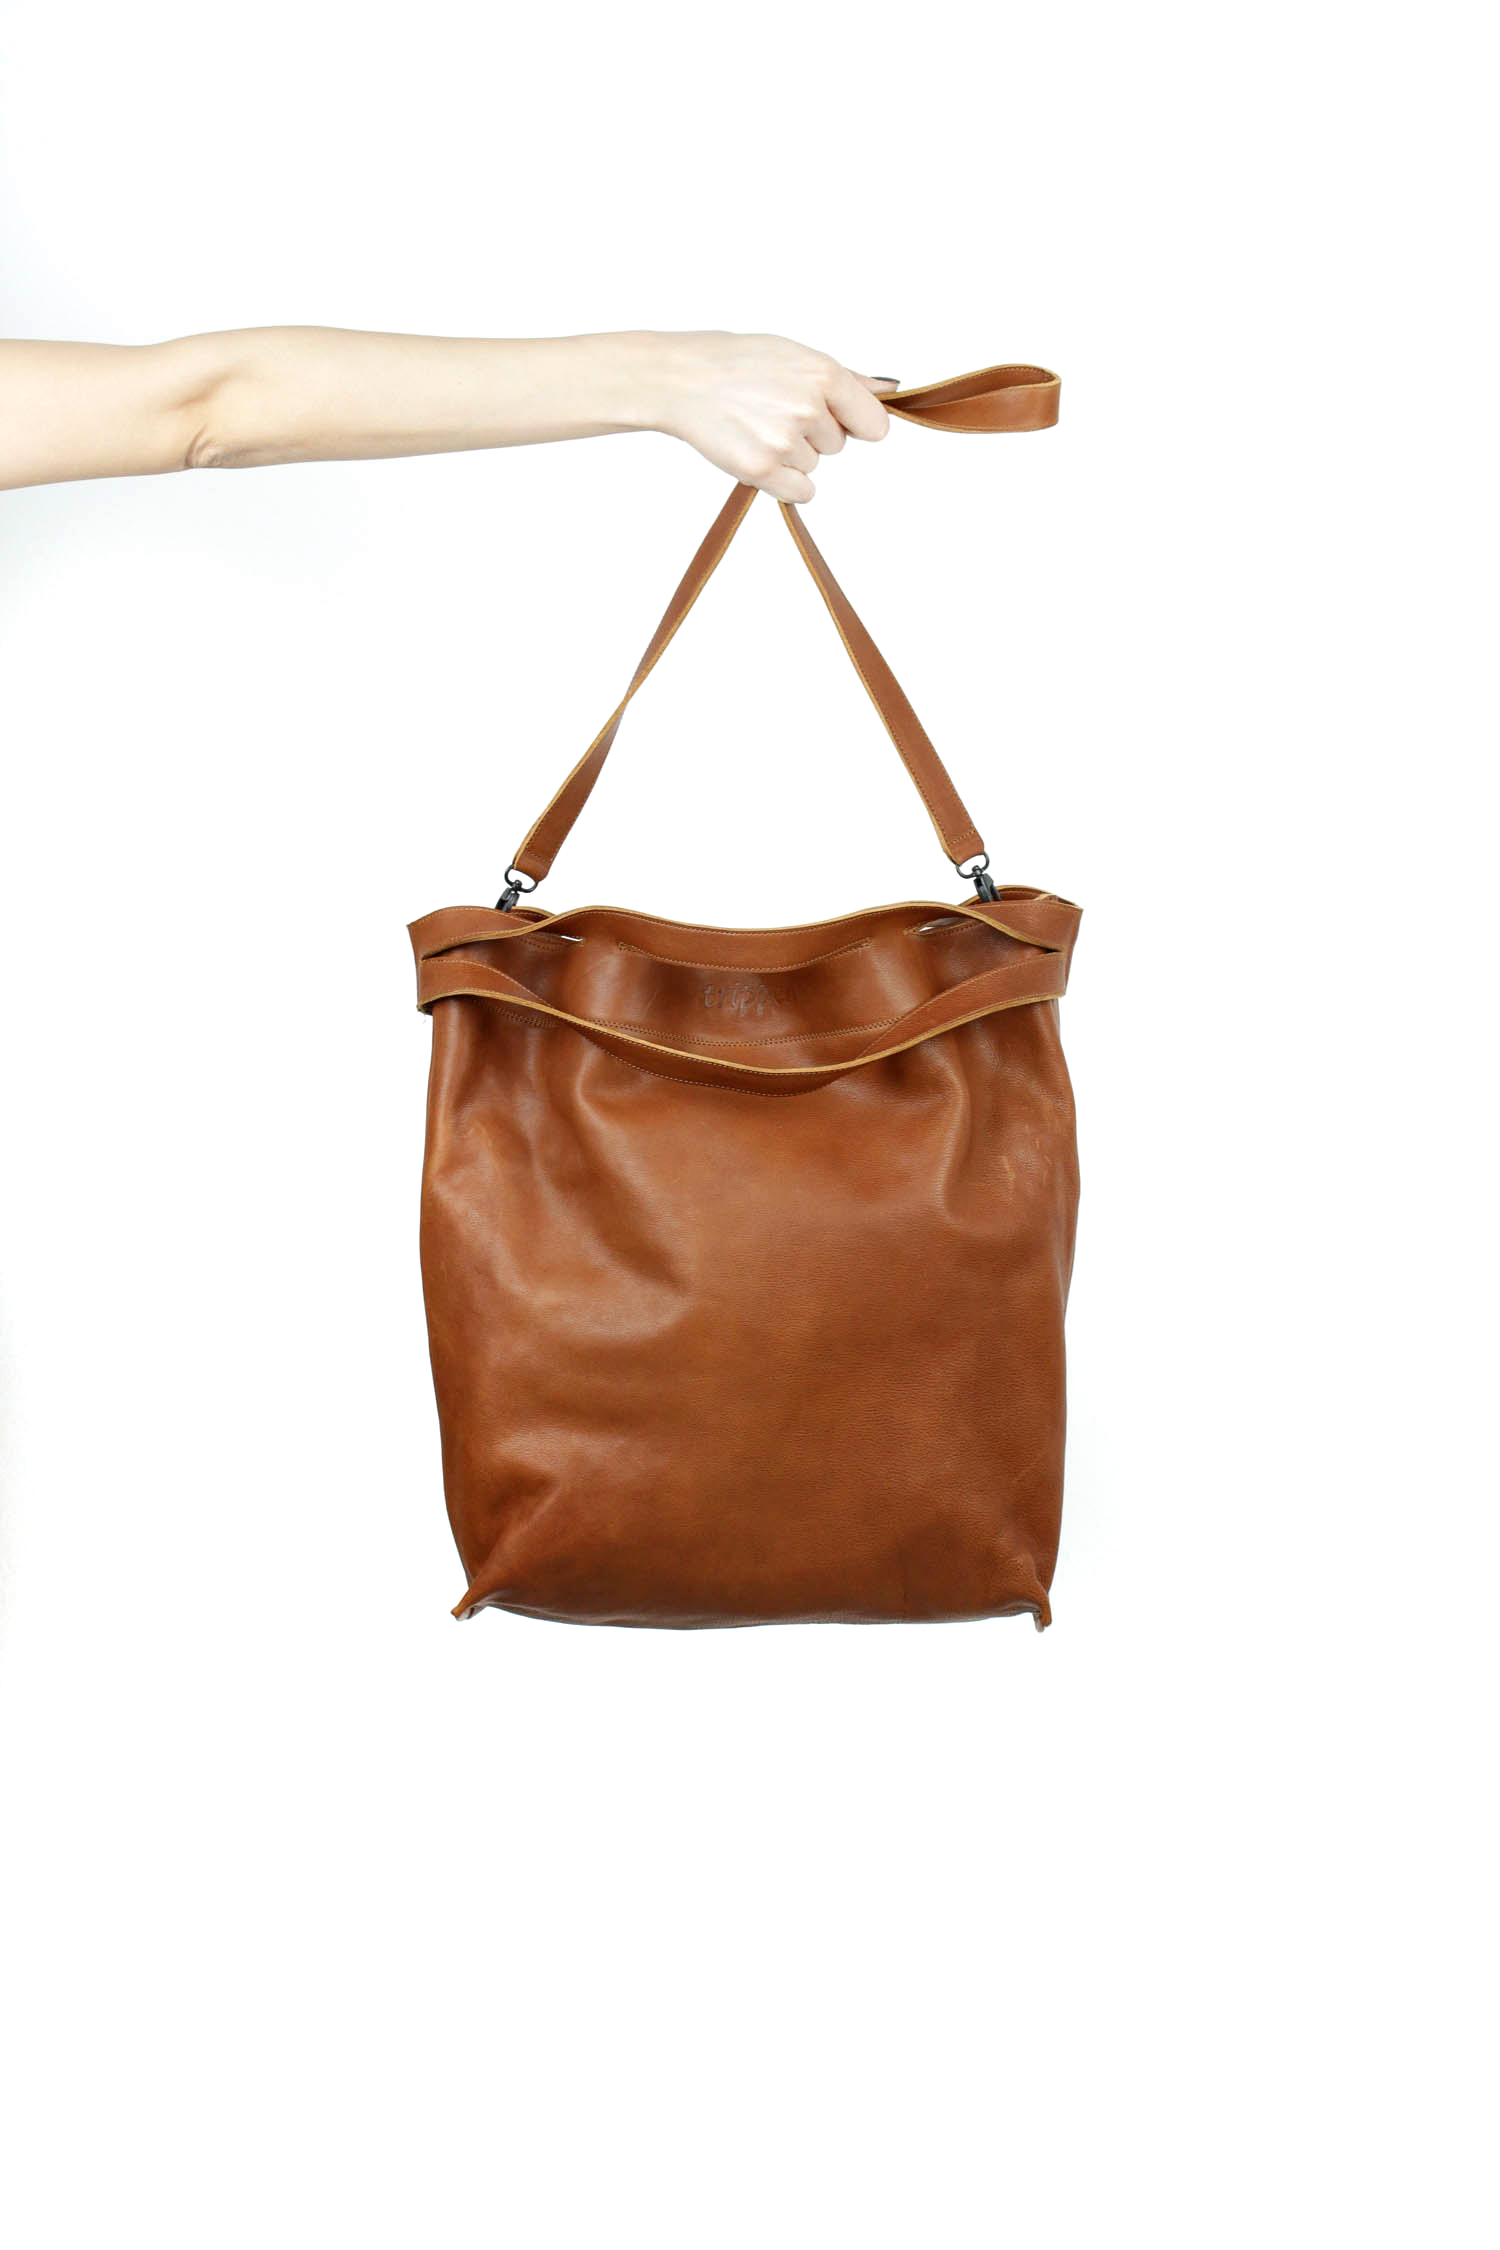 l'Opelle Italia Genuine Leather brown handbag purse Made in